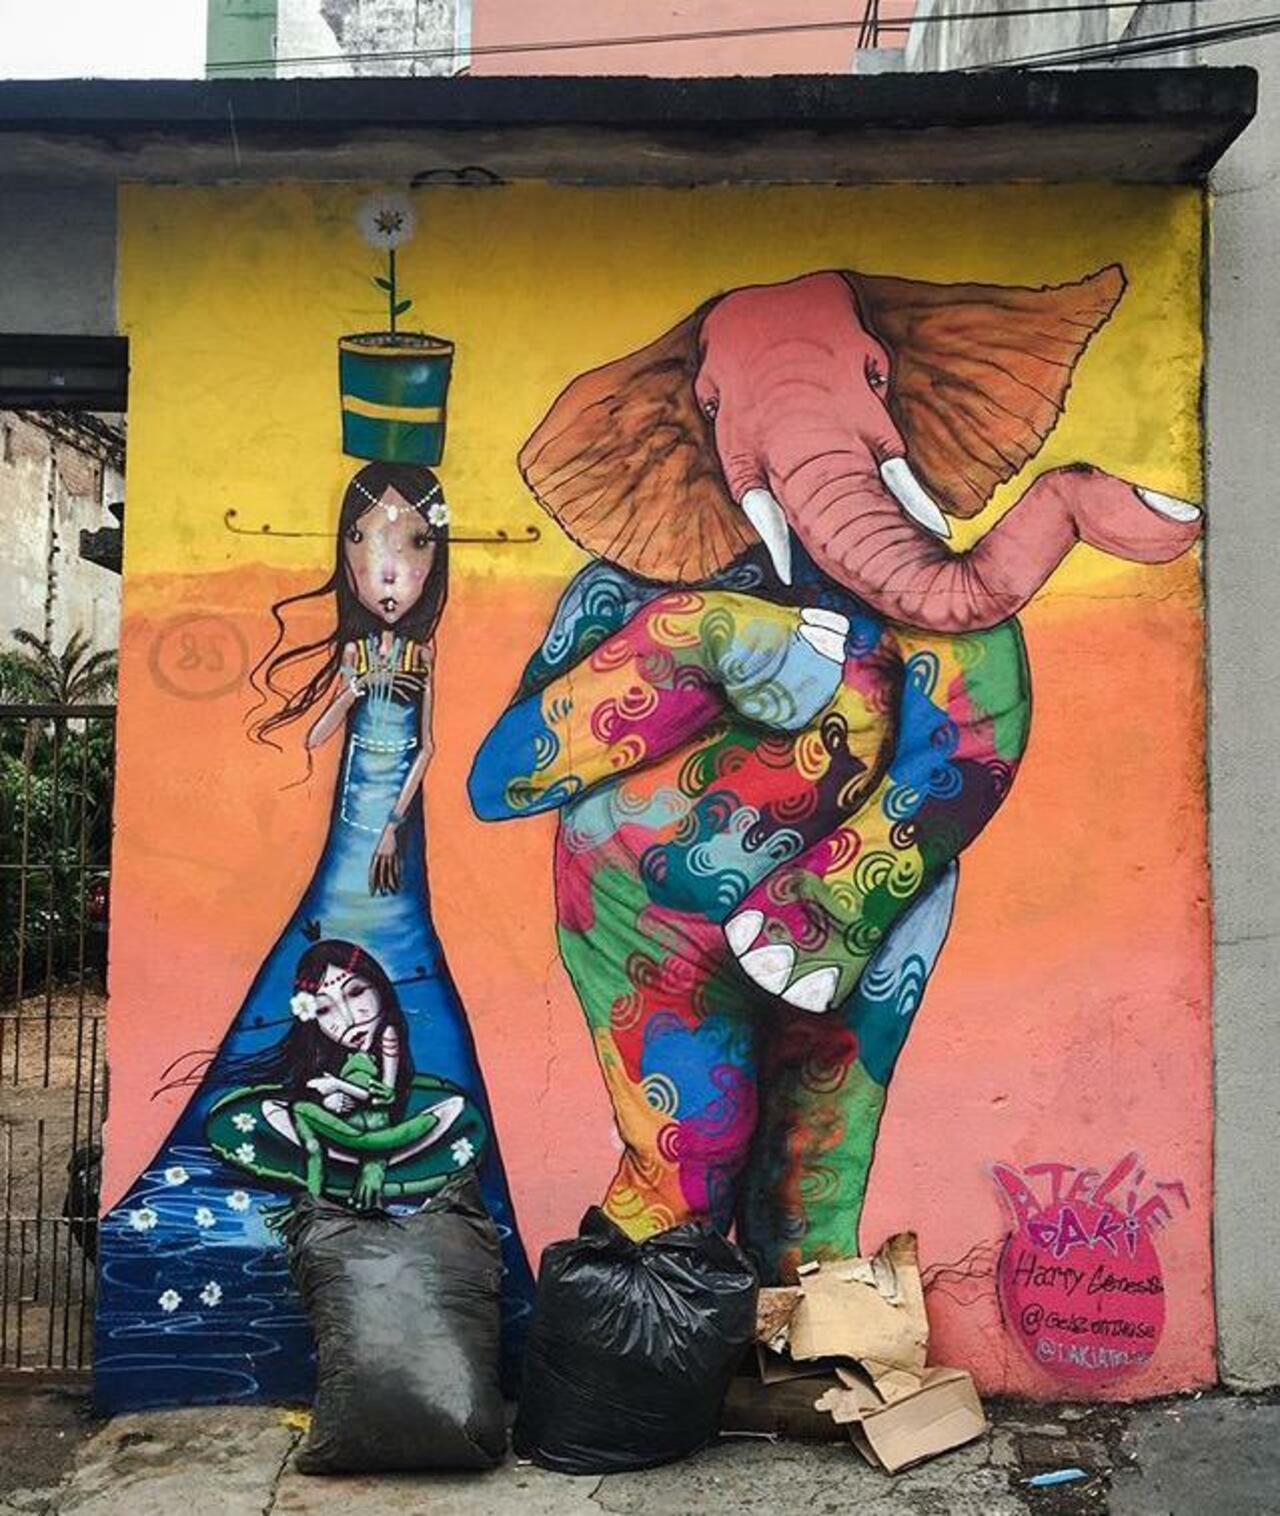 Street Art by Harry Geneis & Gelson in São Paulo #art #mural #graffiti #streetart http://t.co/SlLbhuMZfD … … … …… http://twitter.com/GoogleStreetArt/status/648016473831645184/photo/1/large?utm_source=fb&utm_medium=fb&utm_campaign=charlesjackso14&utm_content=648021463258275840